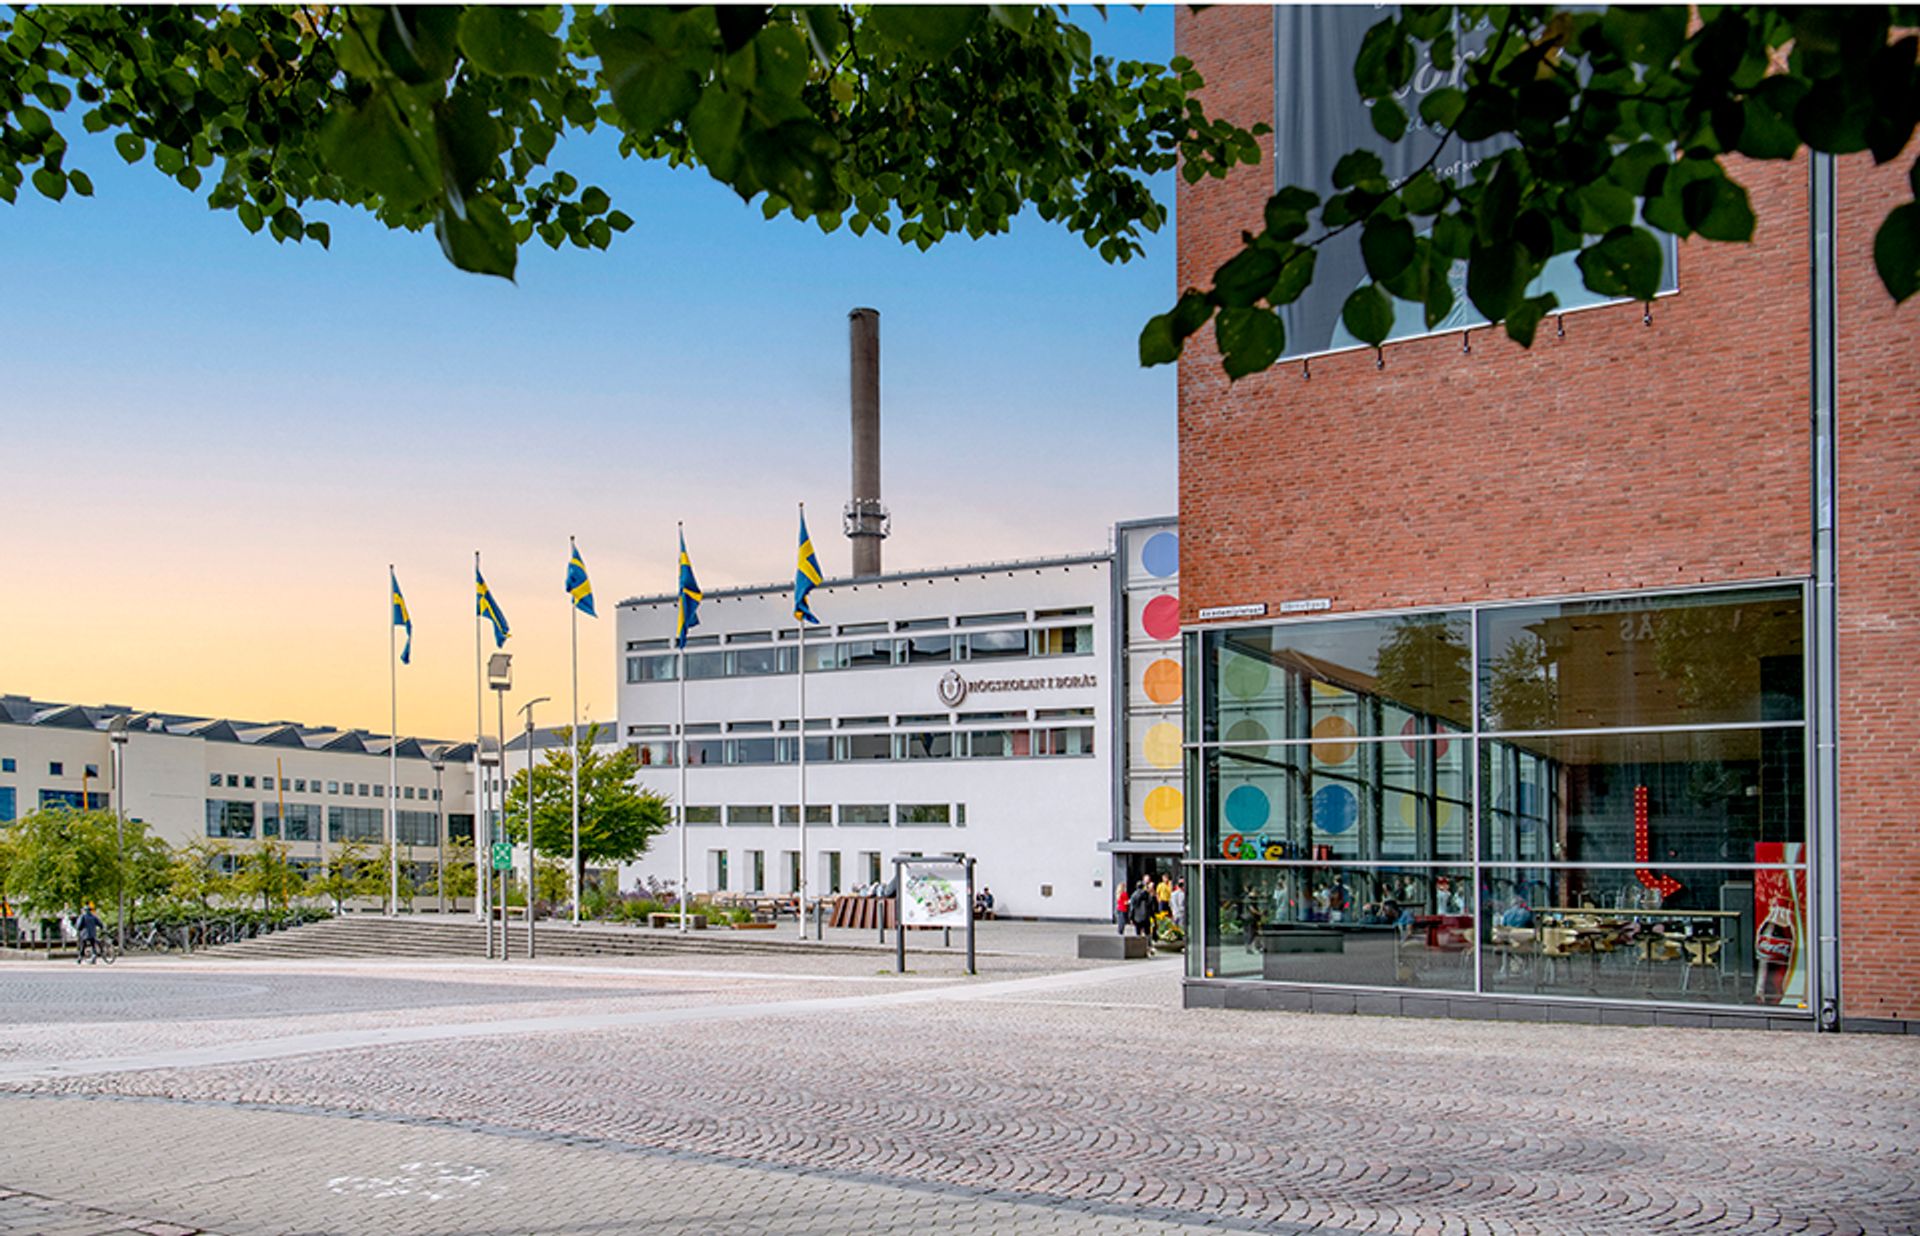 University of Borås campus buildings.